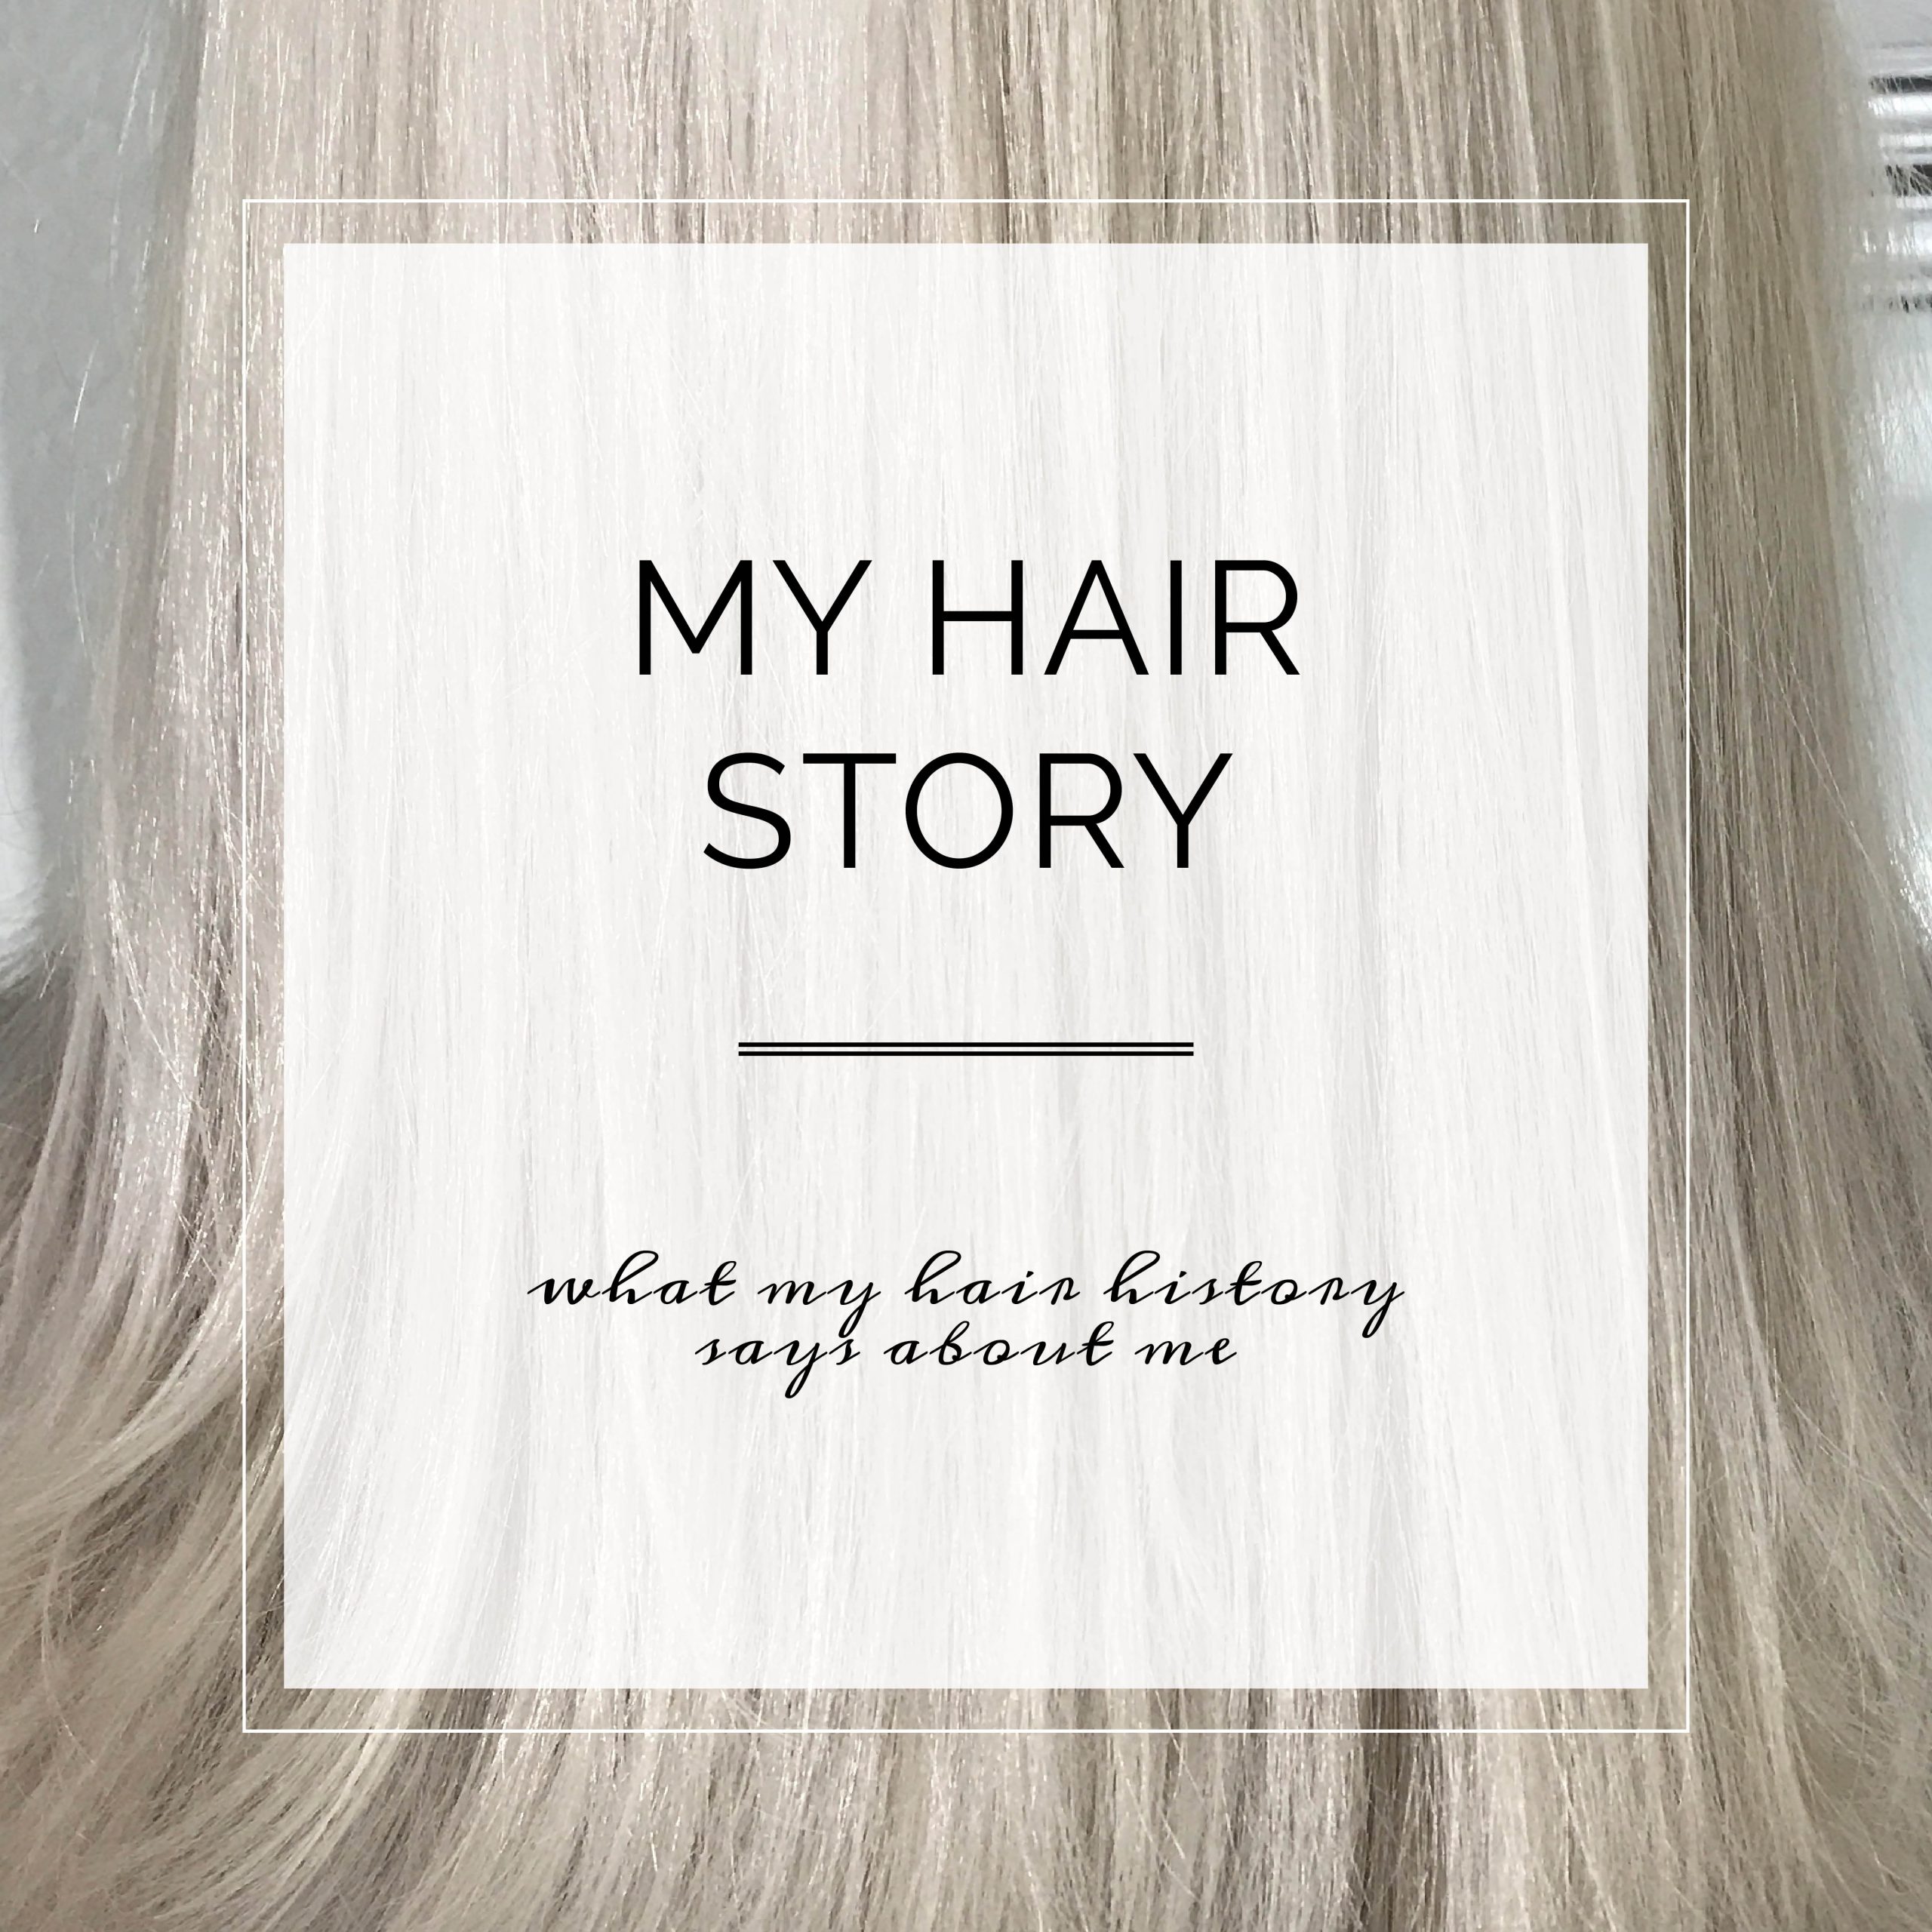 MY HAIR STORY